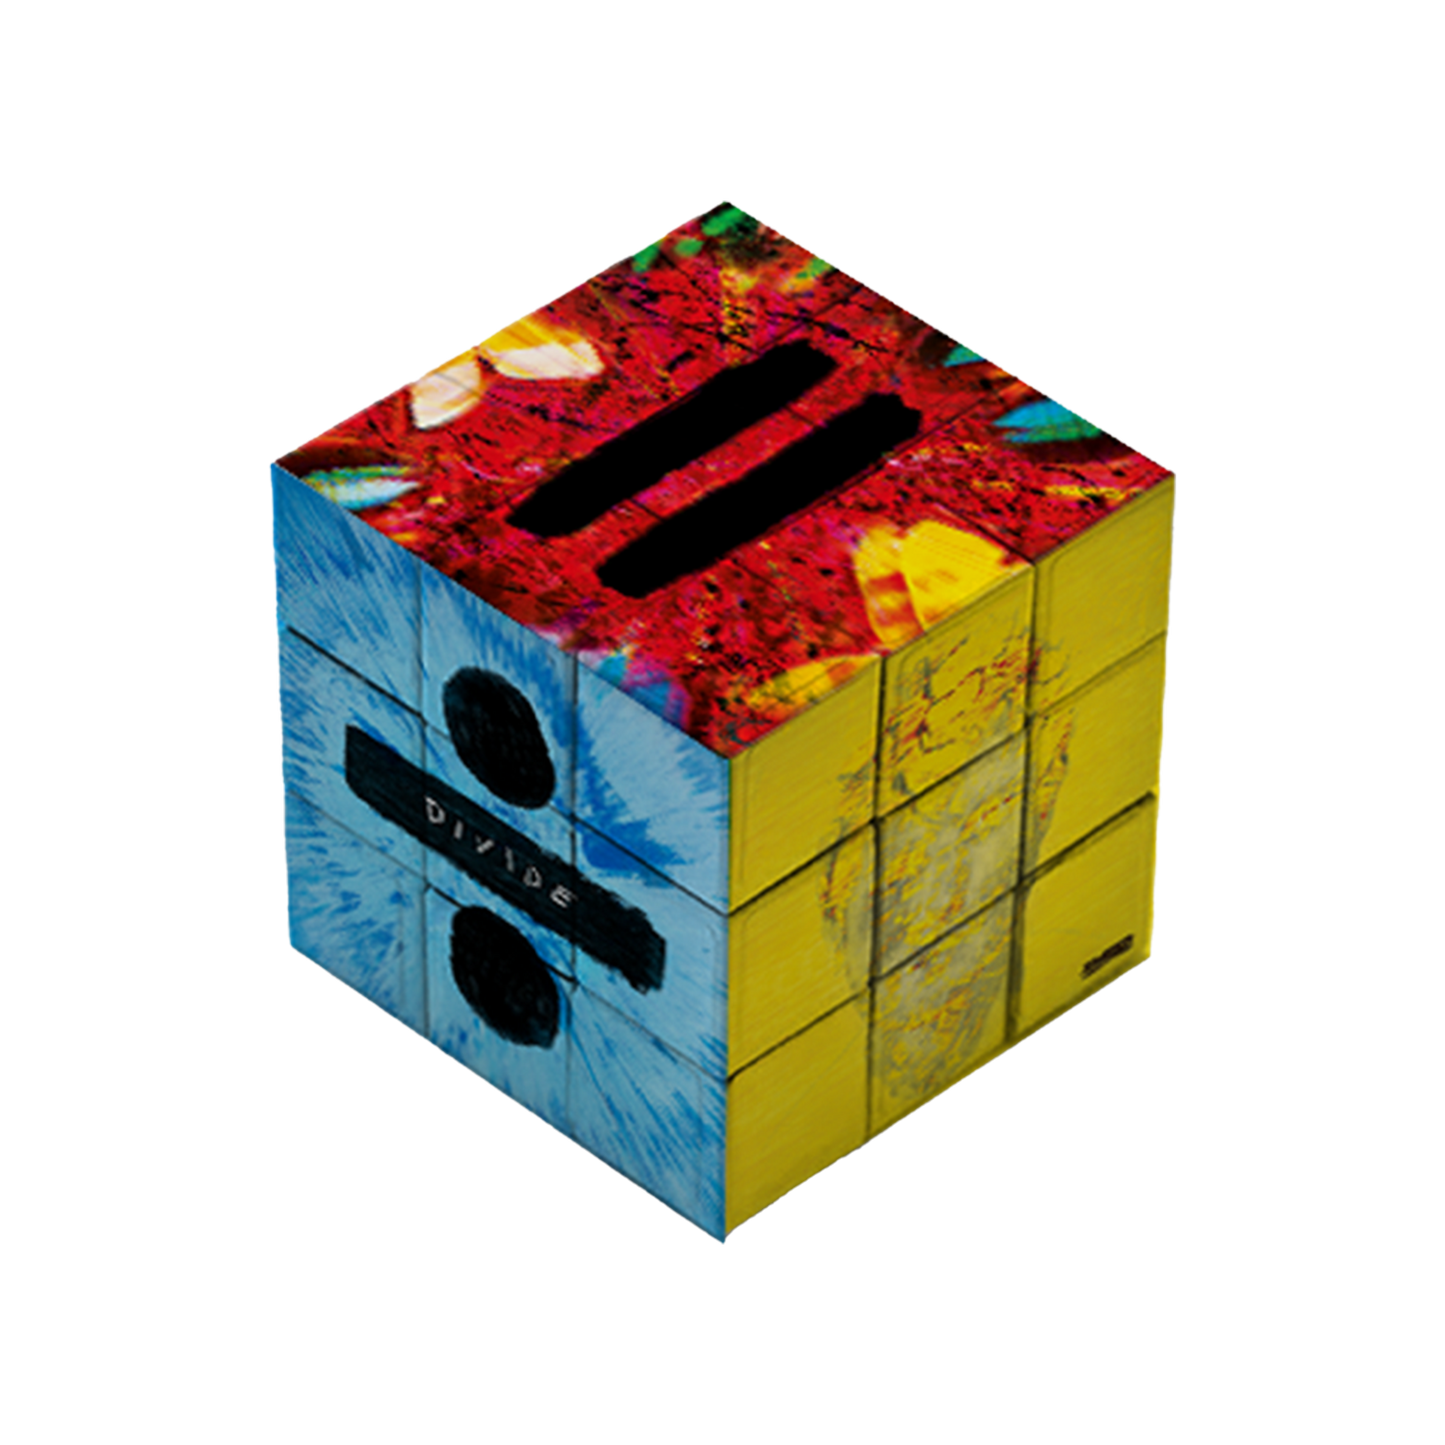 Mathematics Rubik's Cube